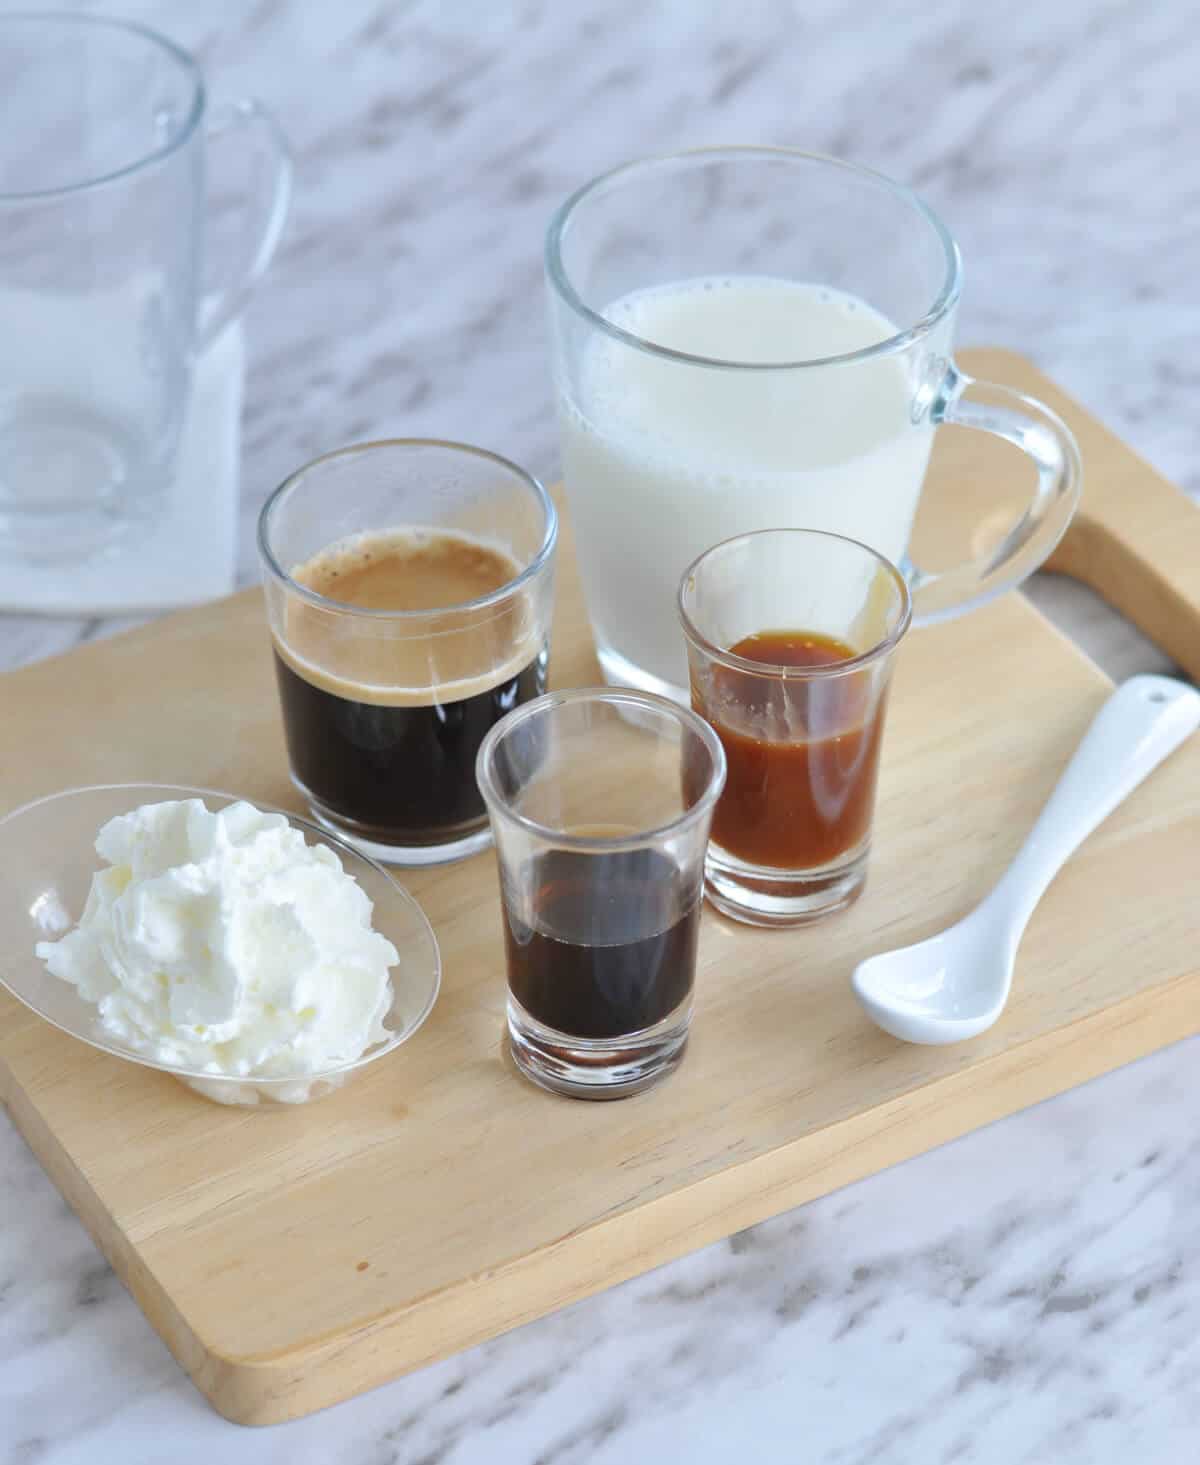 Ingredients to make caramel brulee latte.